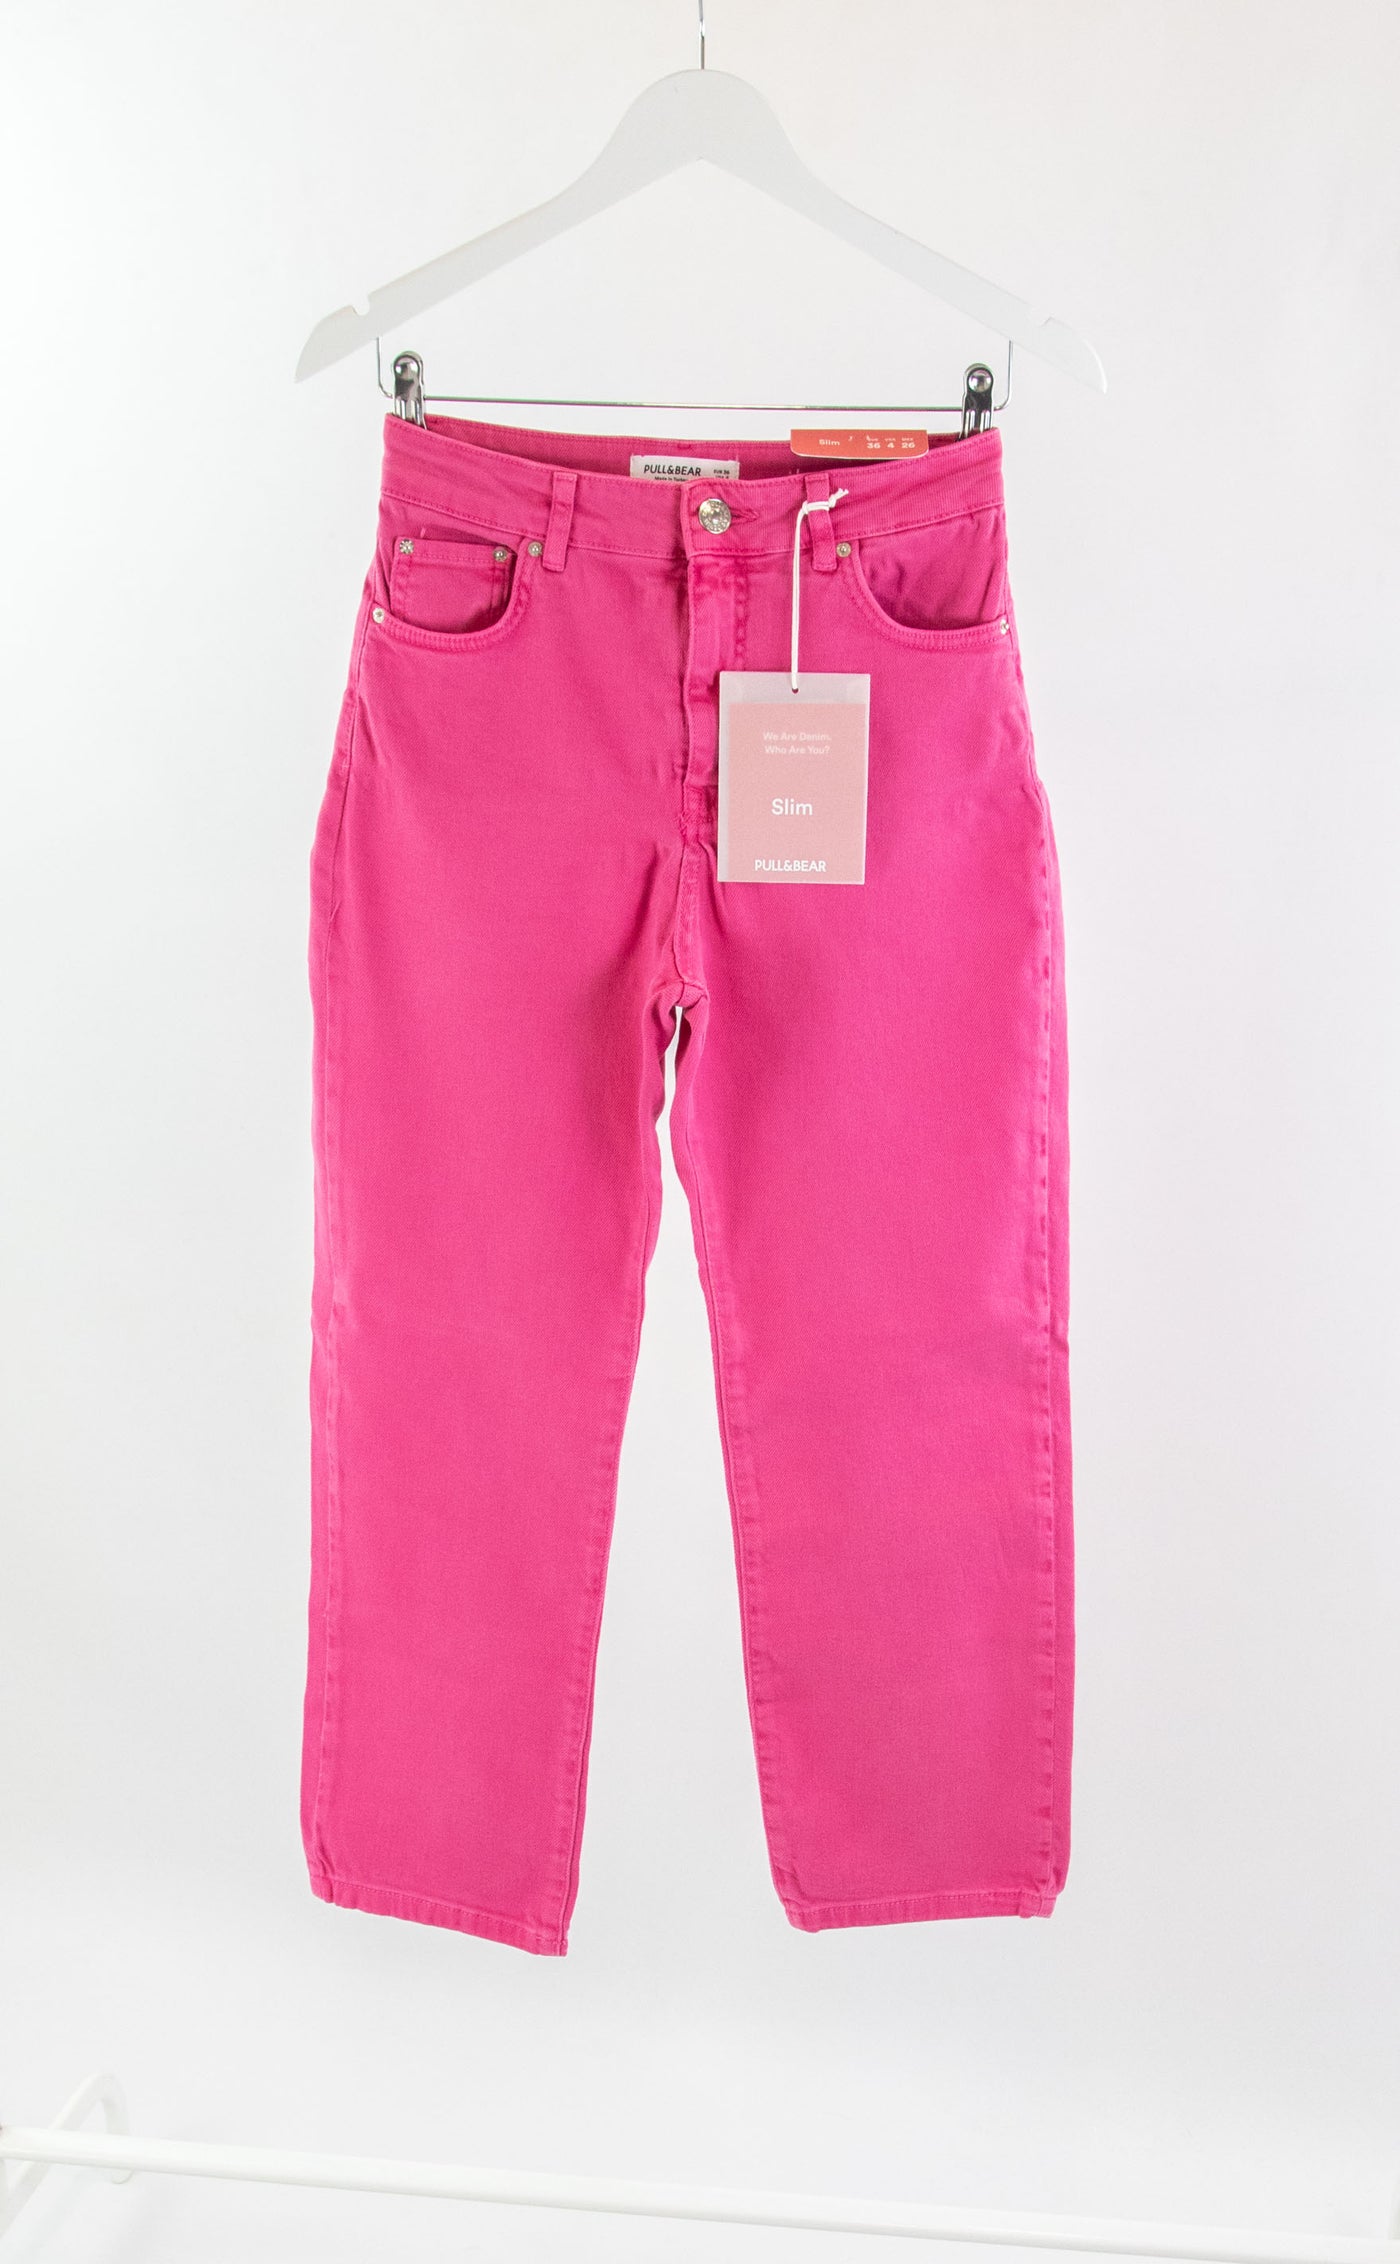 Jeans rosa slim (NUEVO)